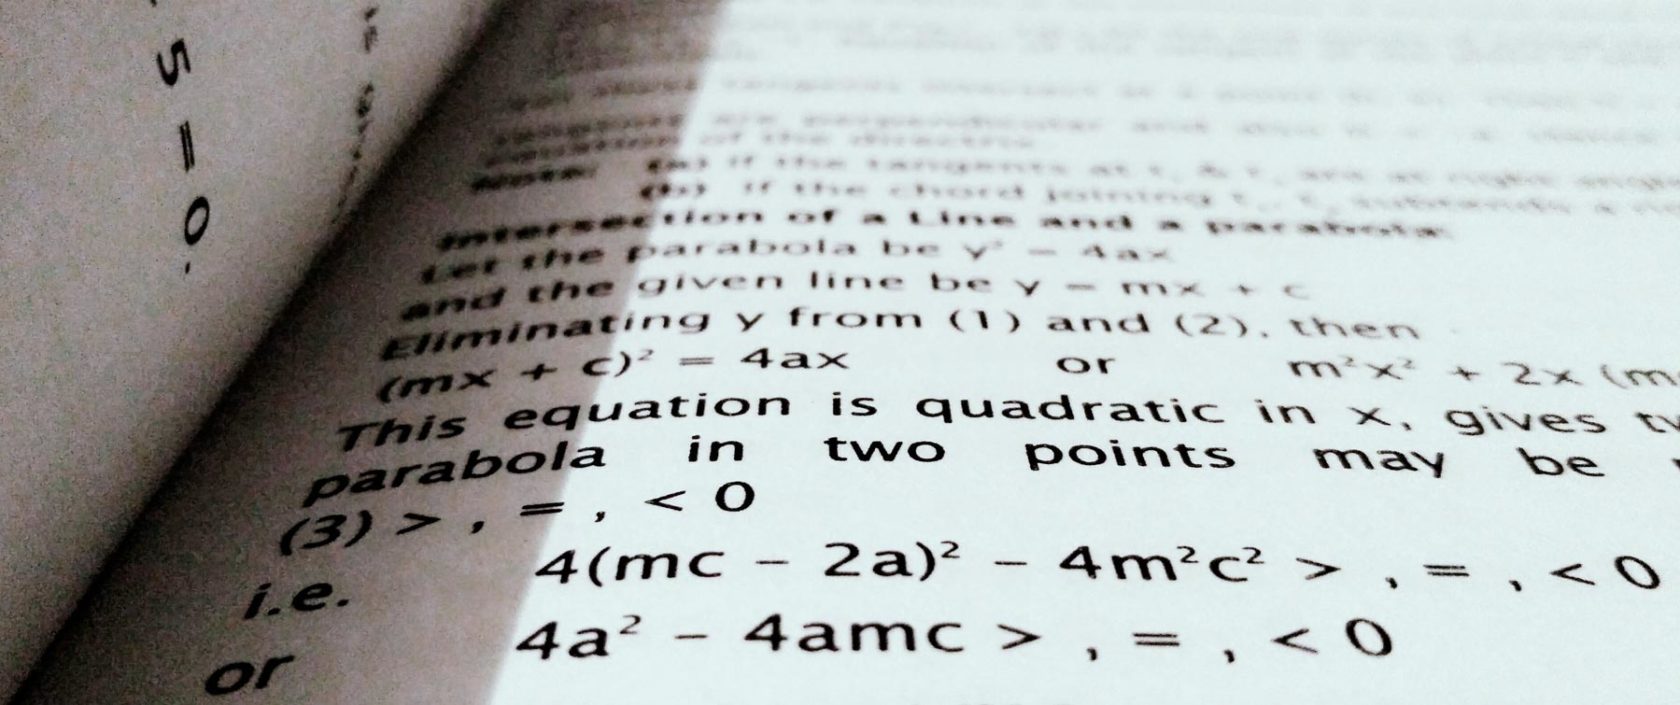 Mathematics text